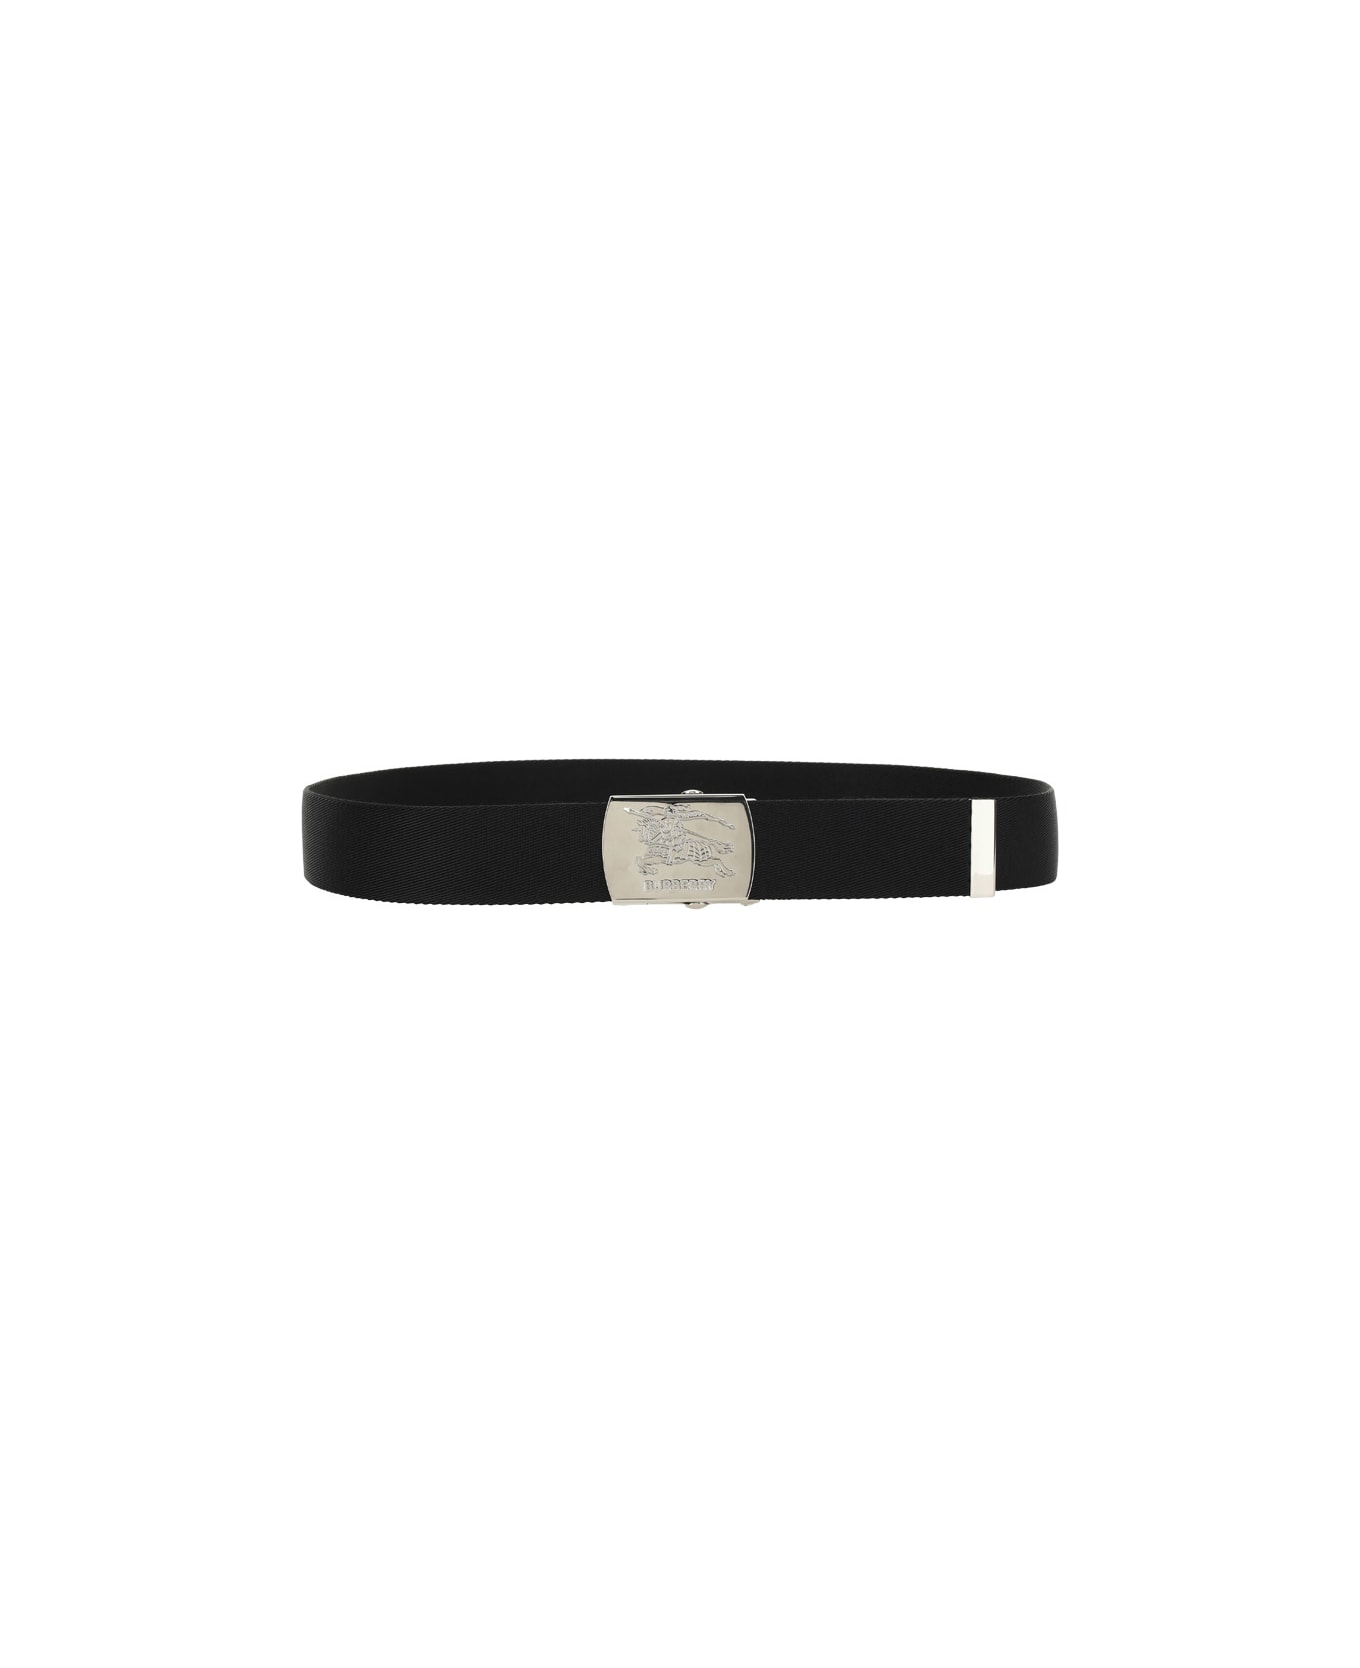 Burberry Belt - Black/silver